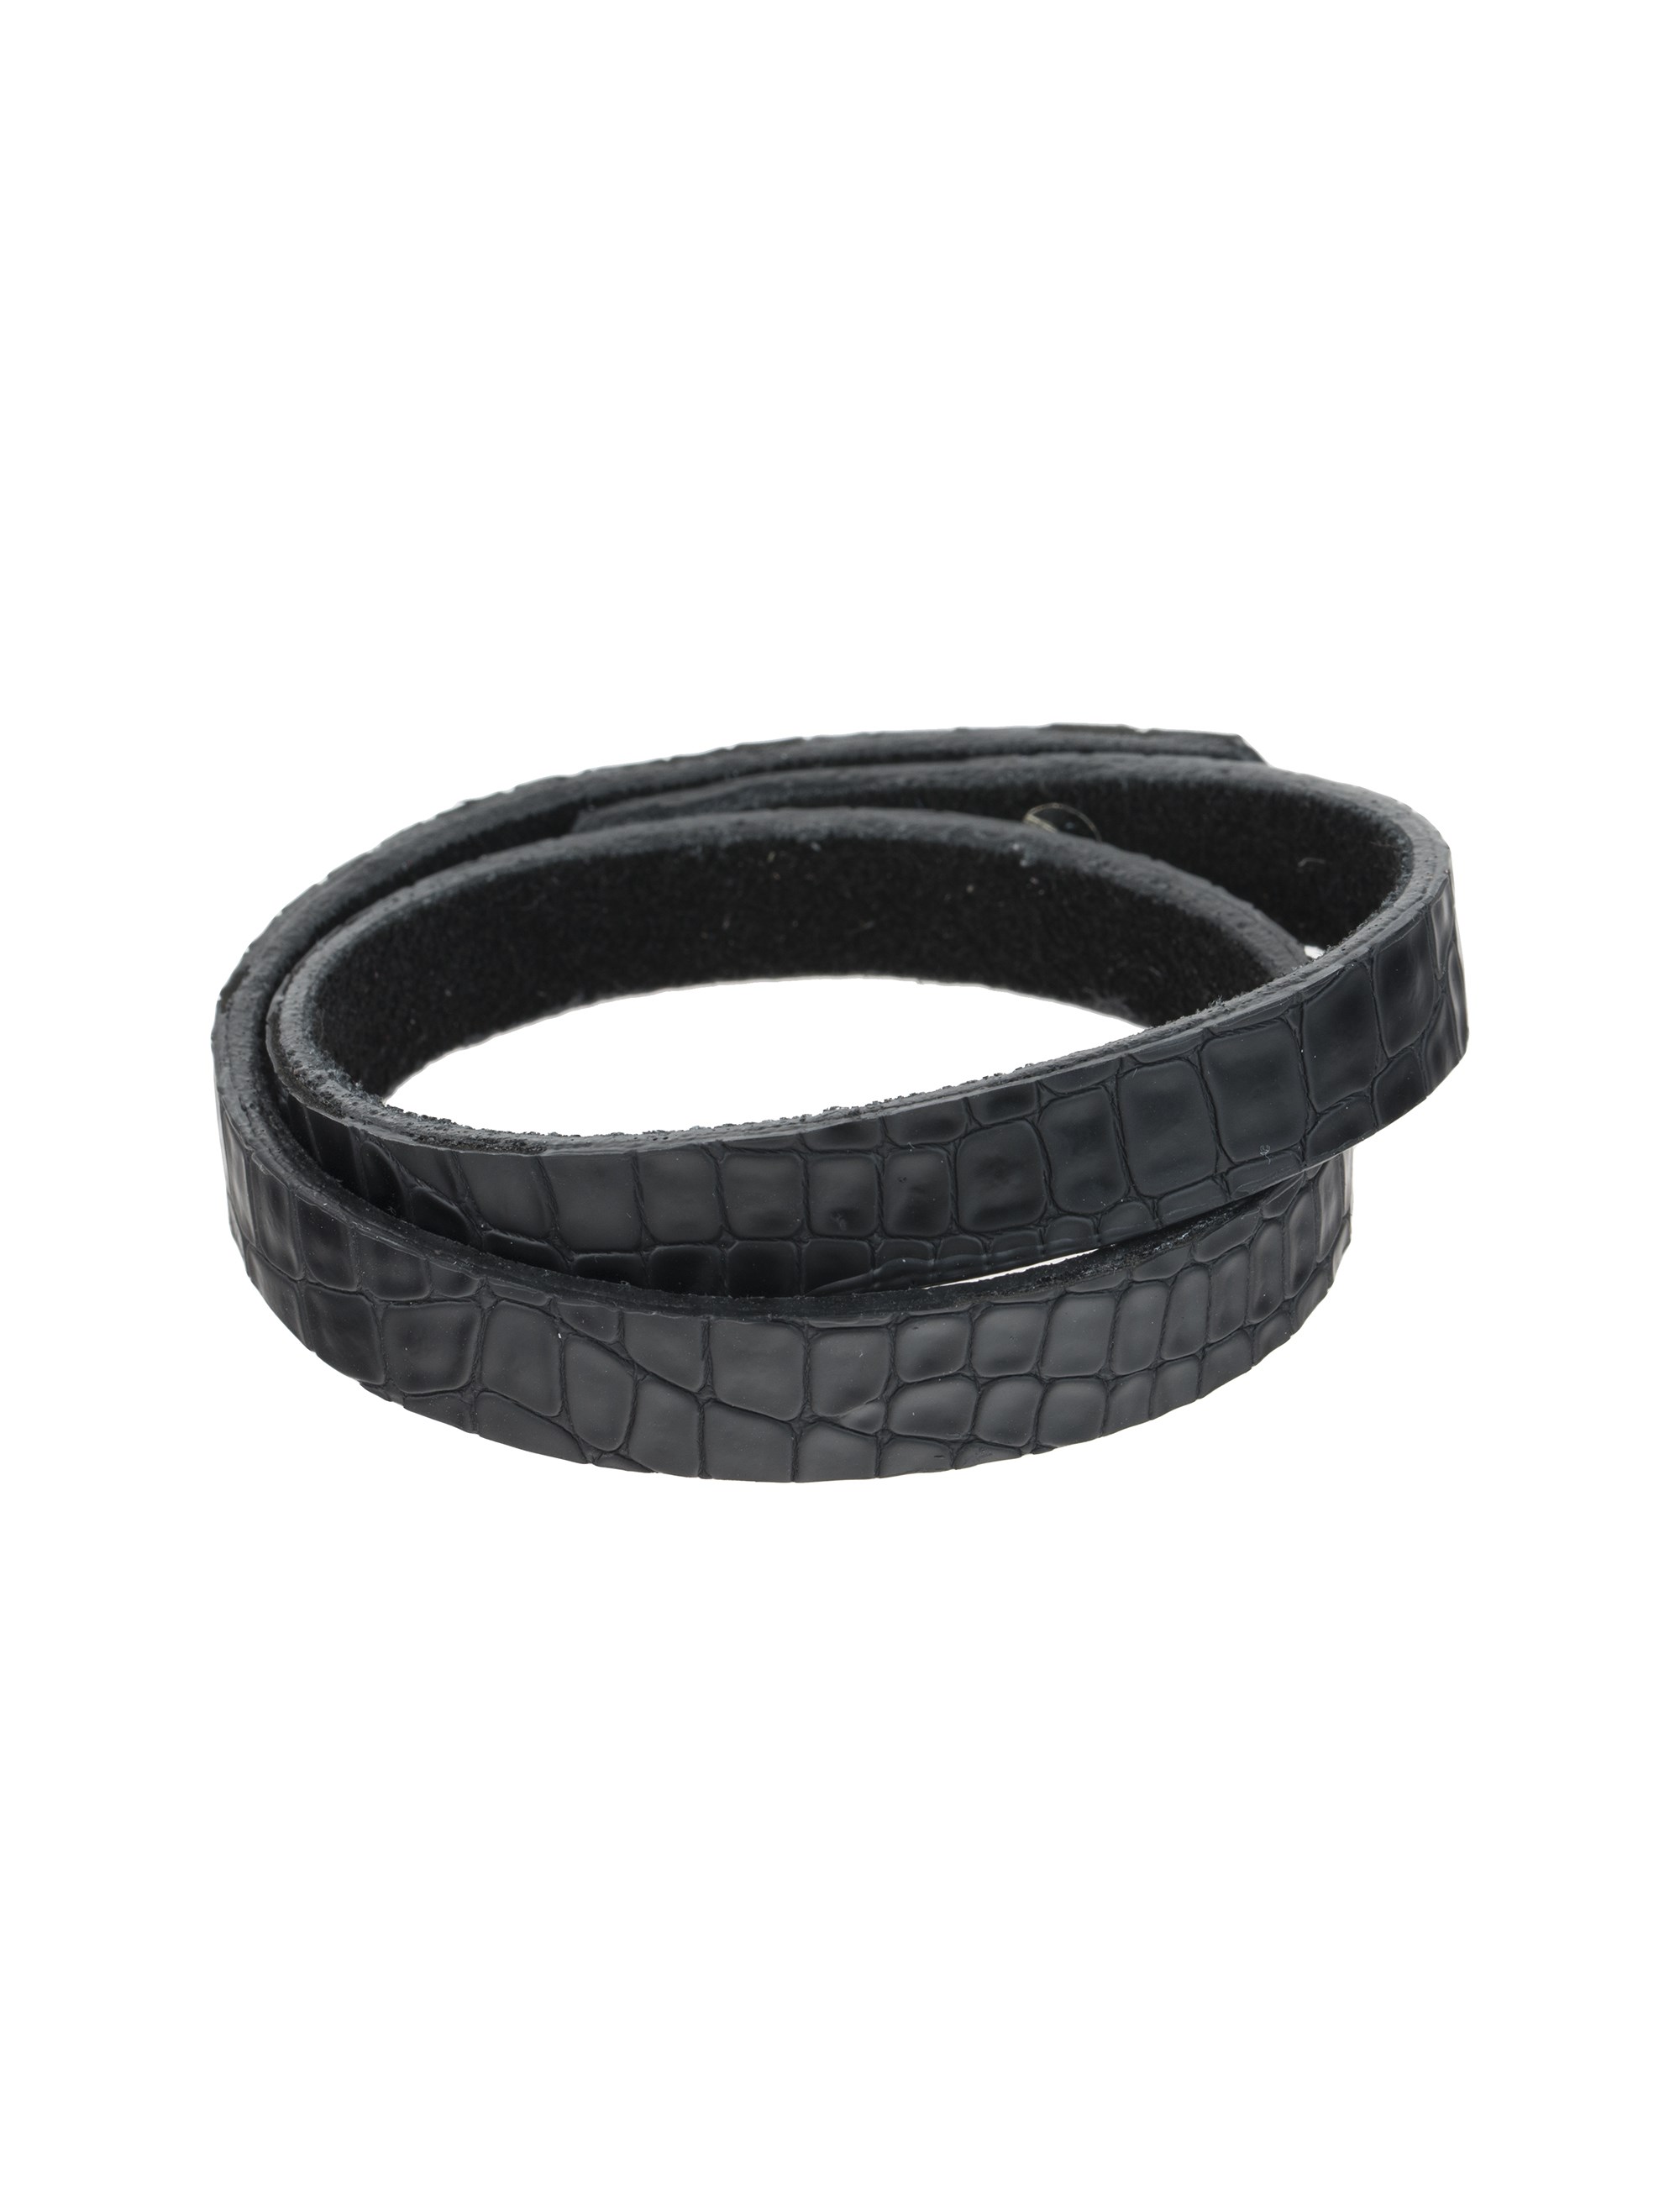 دستبند چرم مردانه - ماکو دیزاین سایز 42 cm